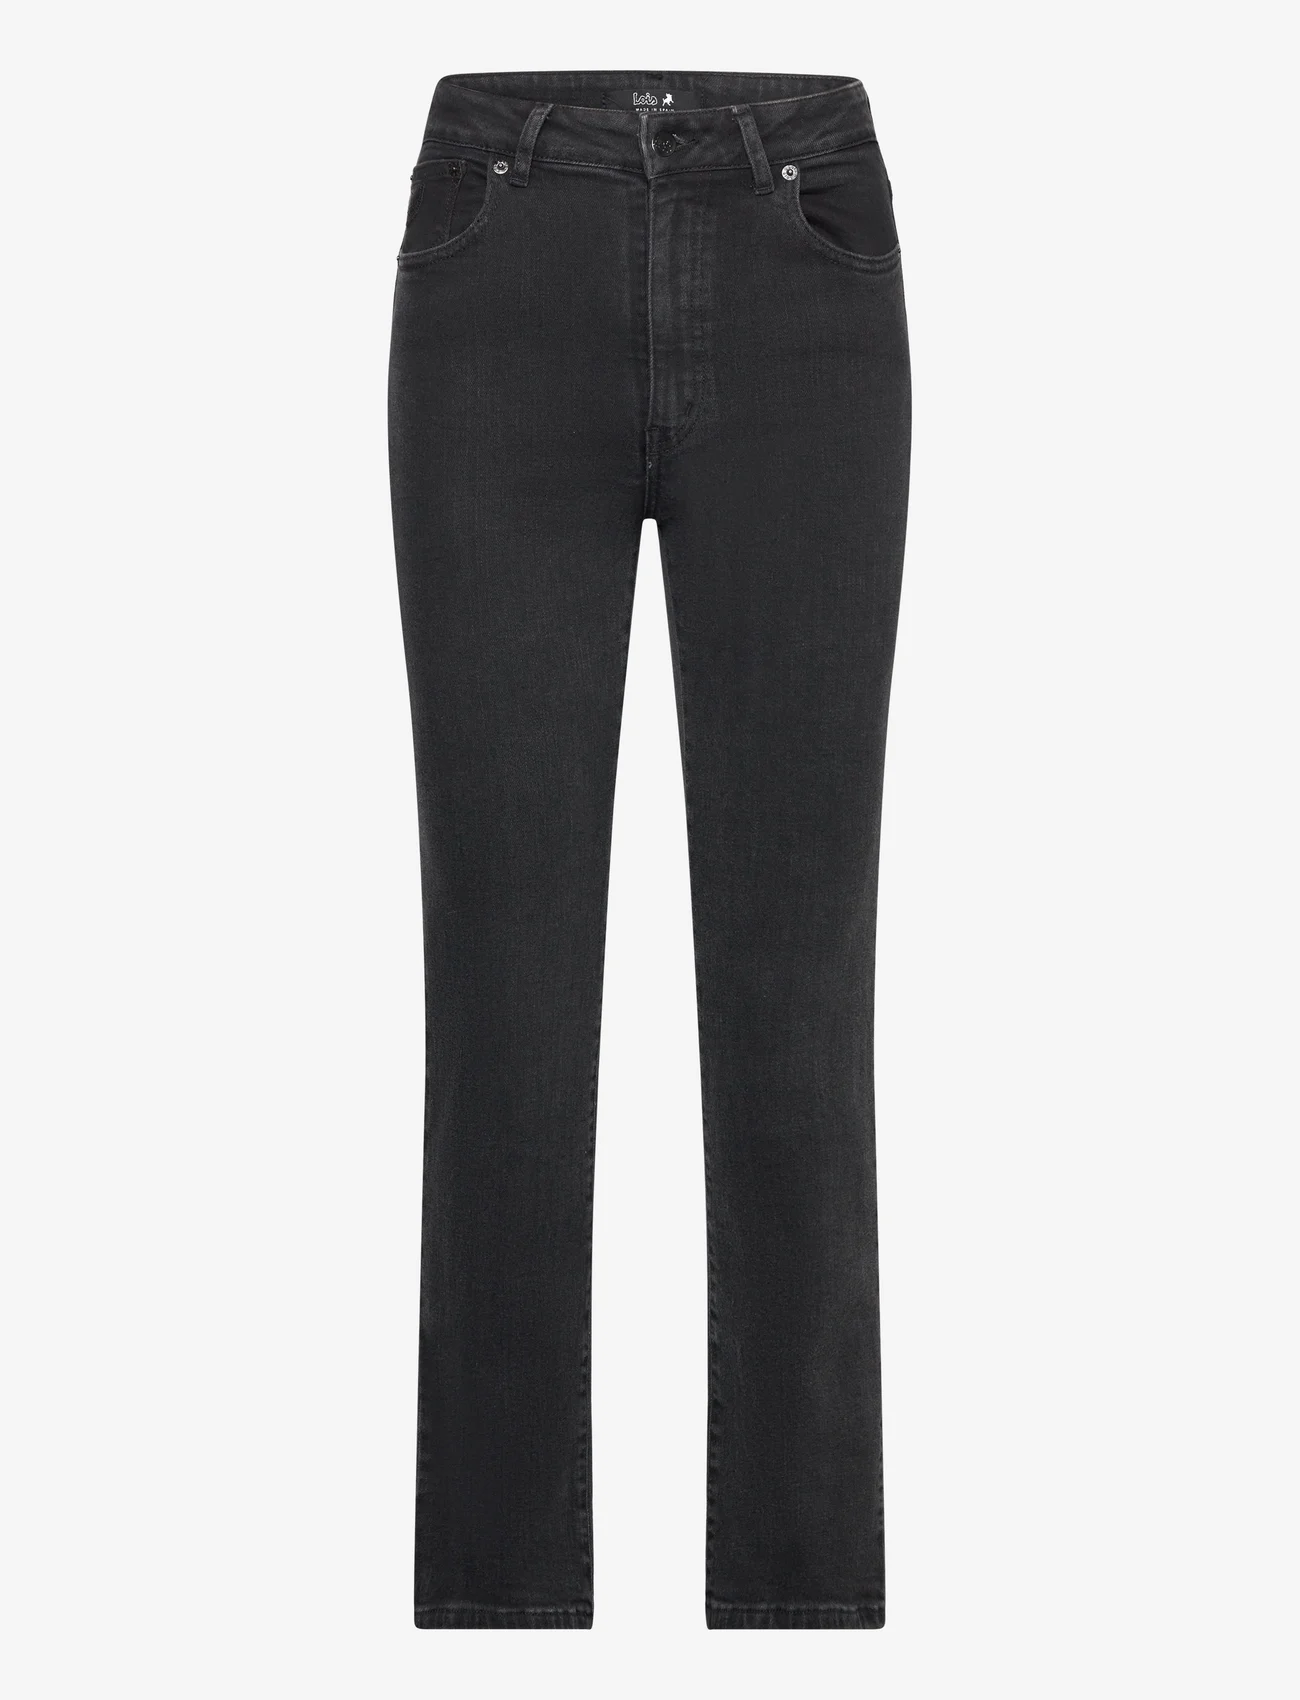 Lois Jeans - Malena-F 7050 Caspar Black Night - straight jeans - black night - 0